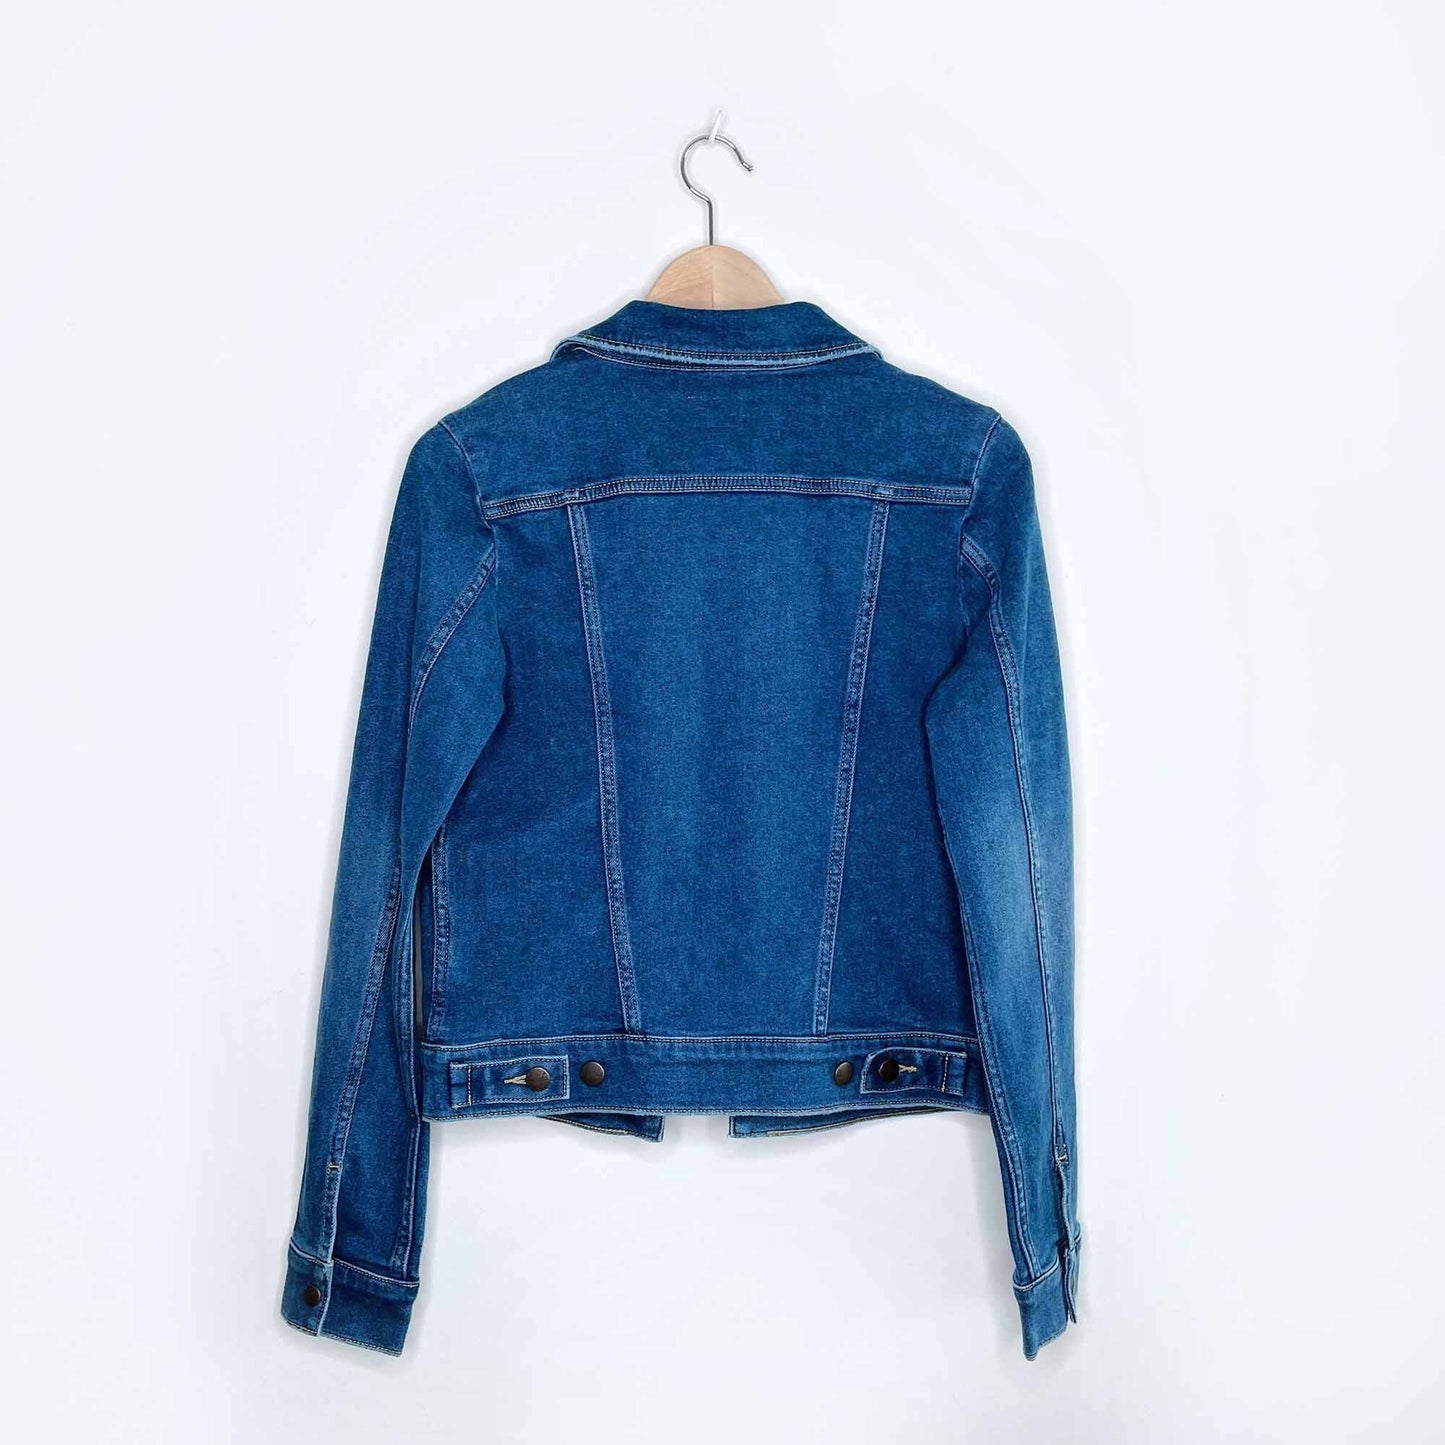 NWT Wrangler Heritage denim jacket In Throwback Blue - size xs